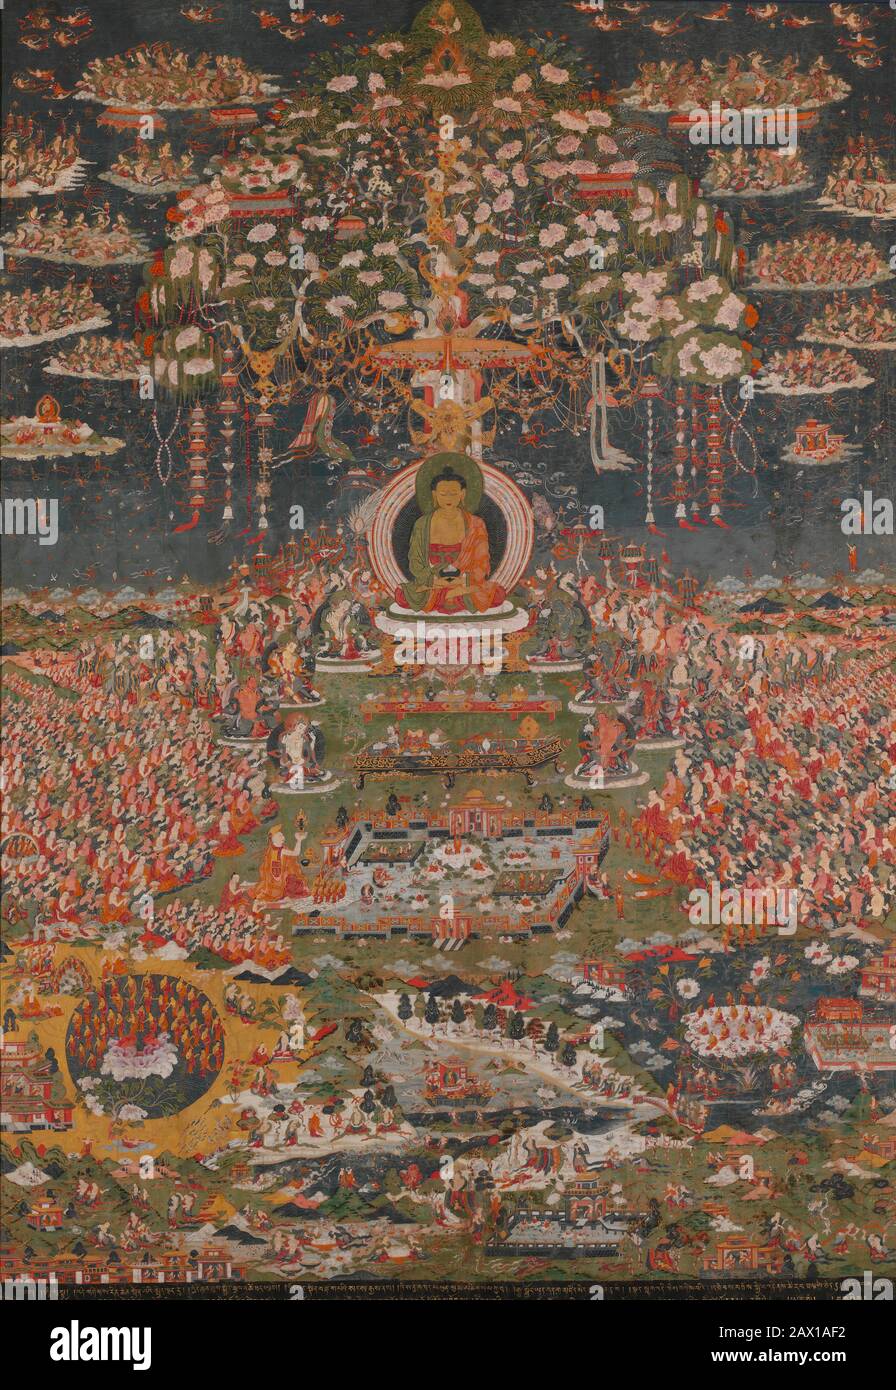 Amitabha, the Buddha of the Western Pure Land (Sukhavati), ca. 1700. Amitayus, the Buddha of Eternal Life. Stock Photo